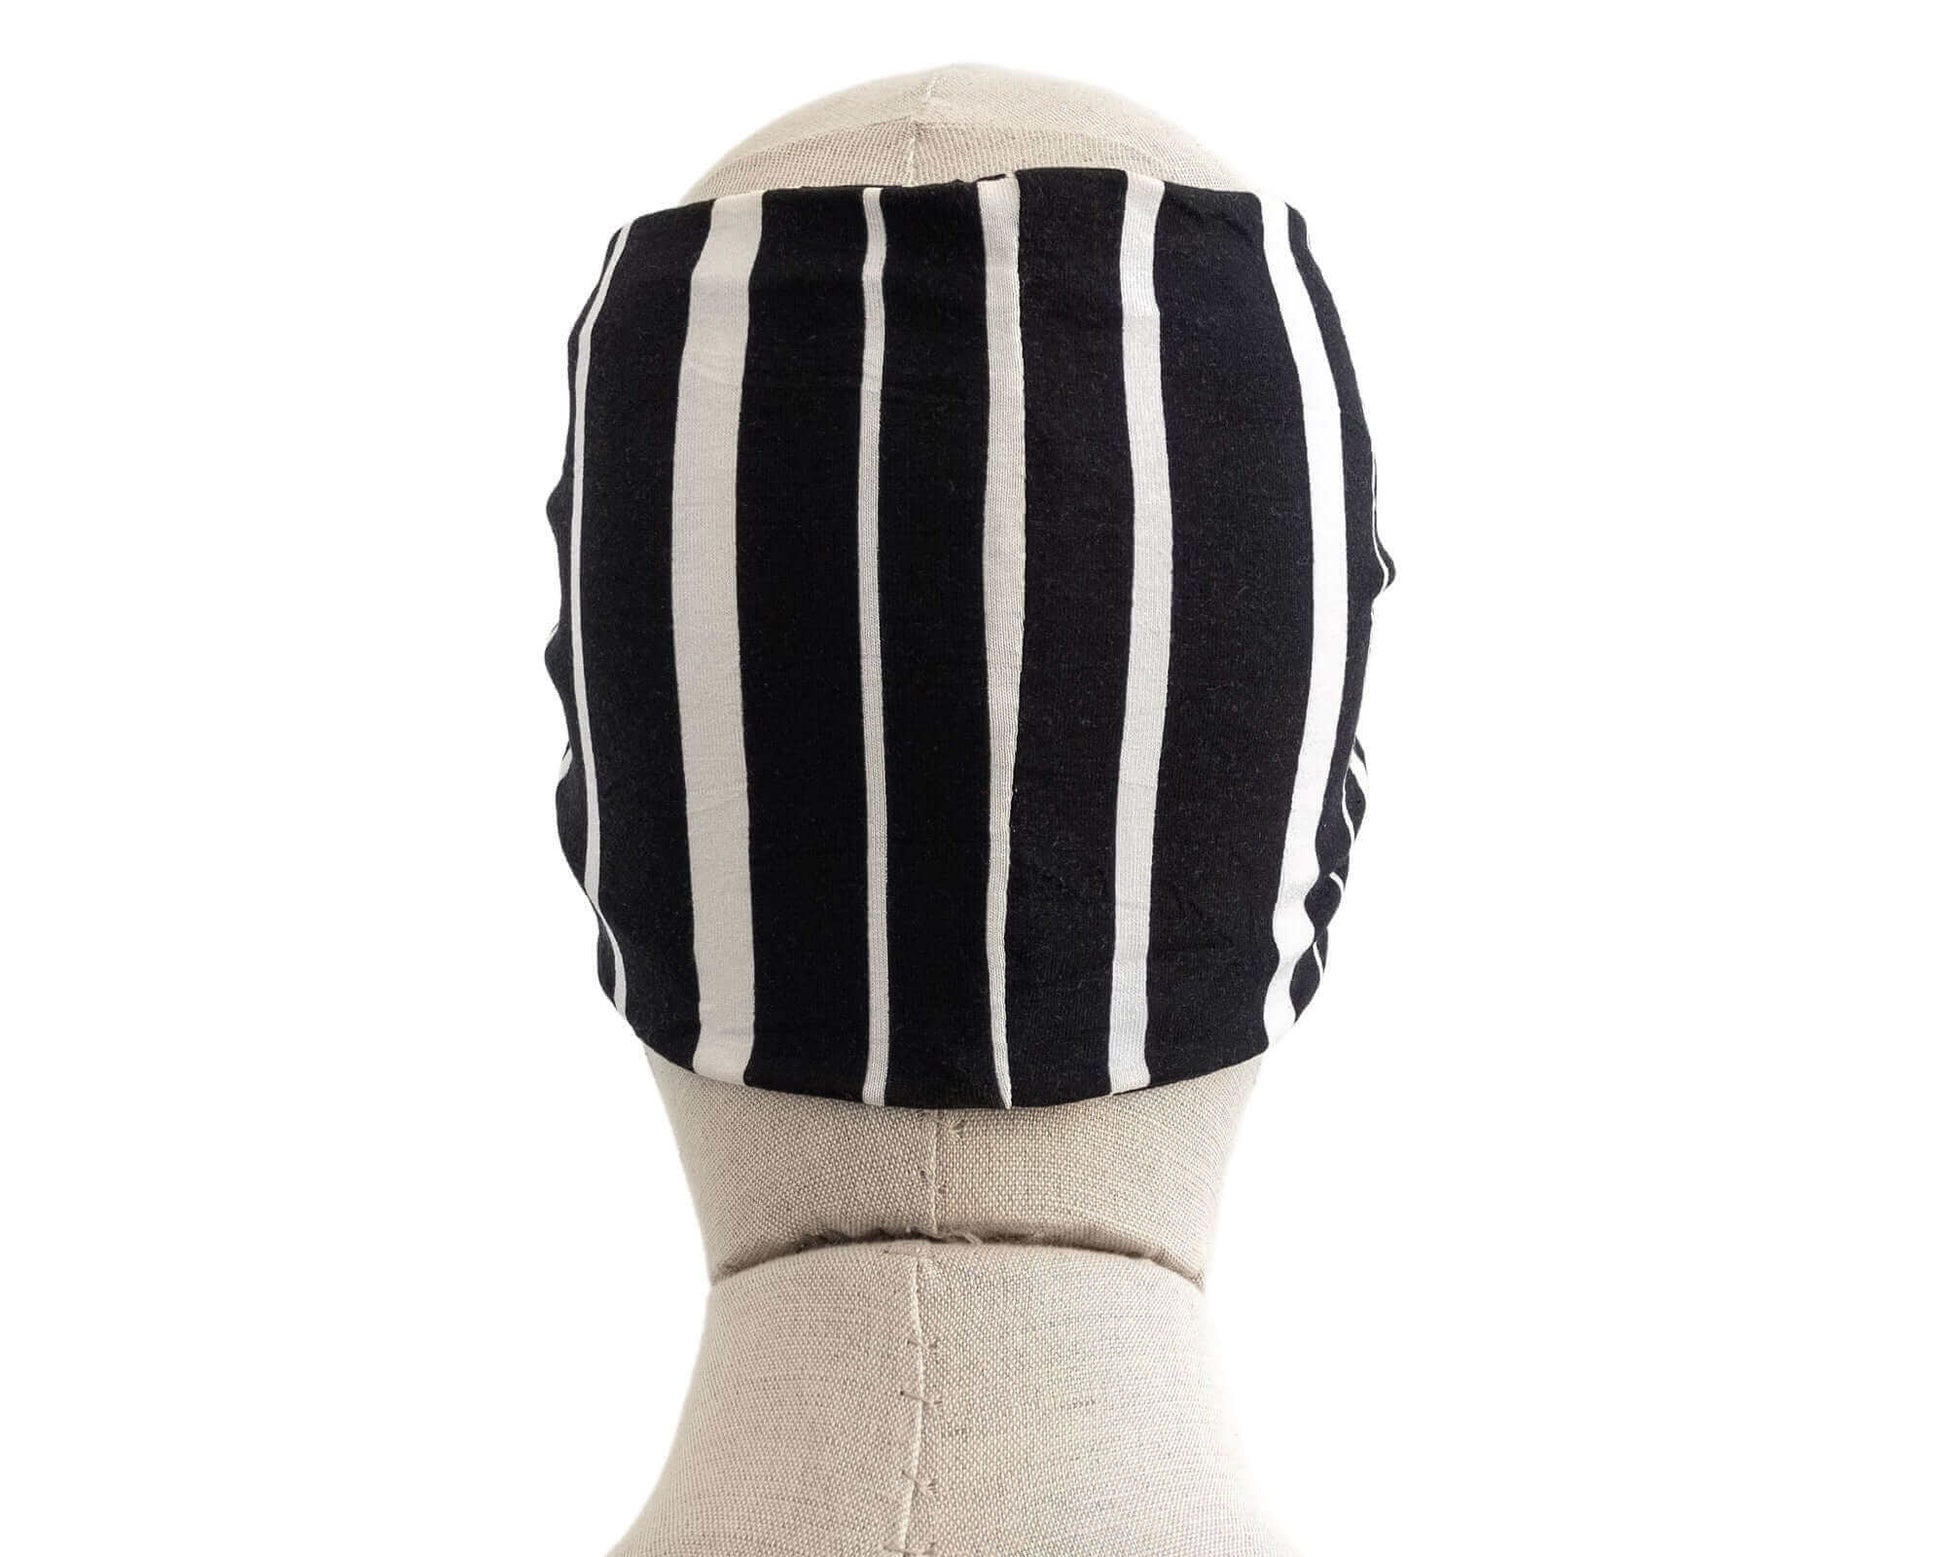 Black & White, Twist Stretch Headband, Stripe Headband, Viscose Fabric (wood pulp) Mix